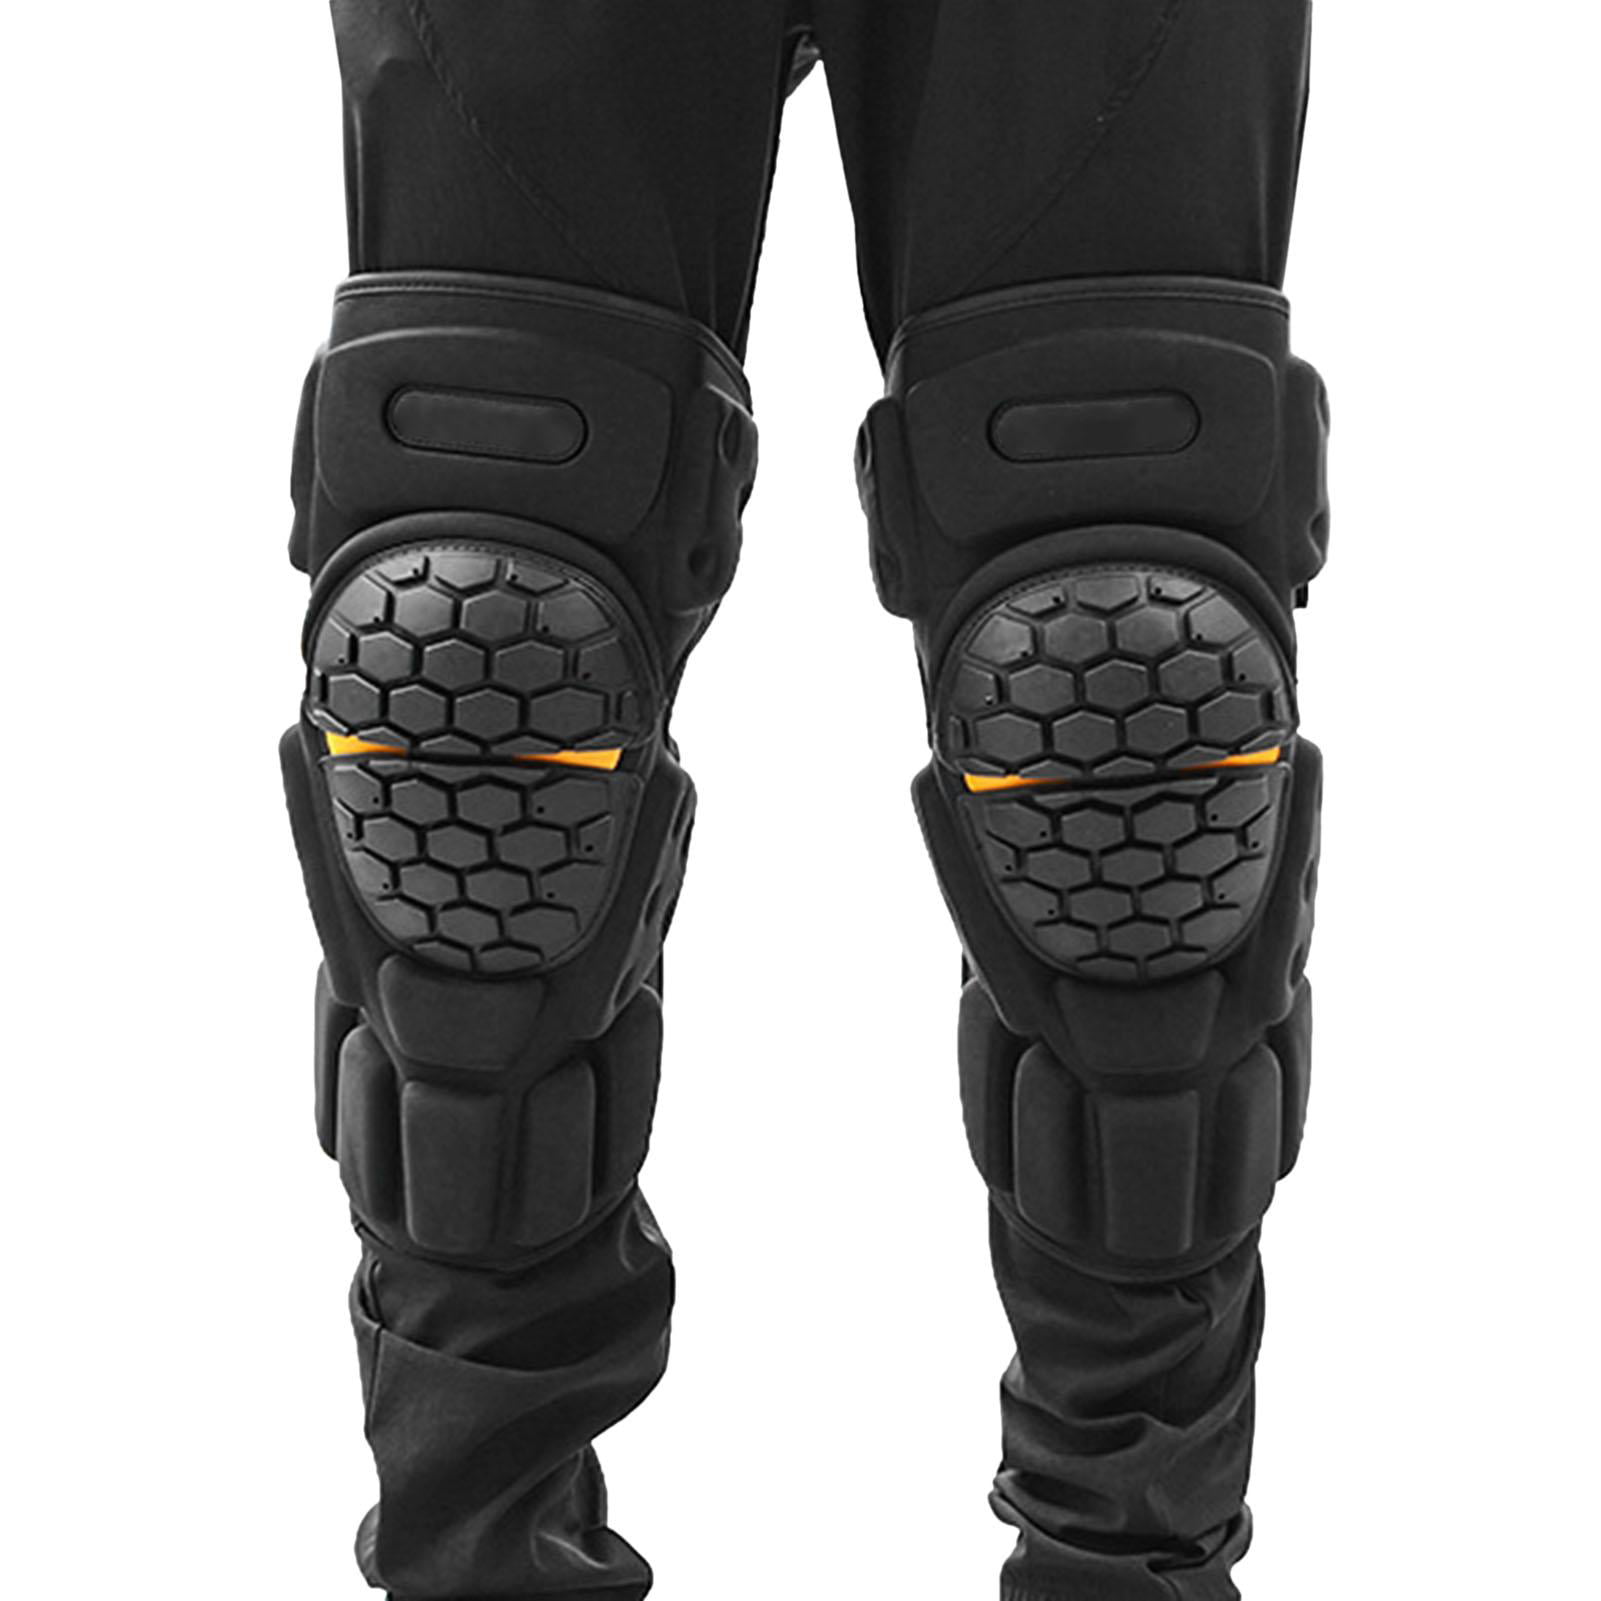 4× Knee Braces Shin Elbow Guard Protector Guard Pad Motorcycle Motocross Racing 